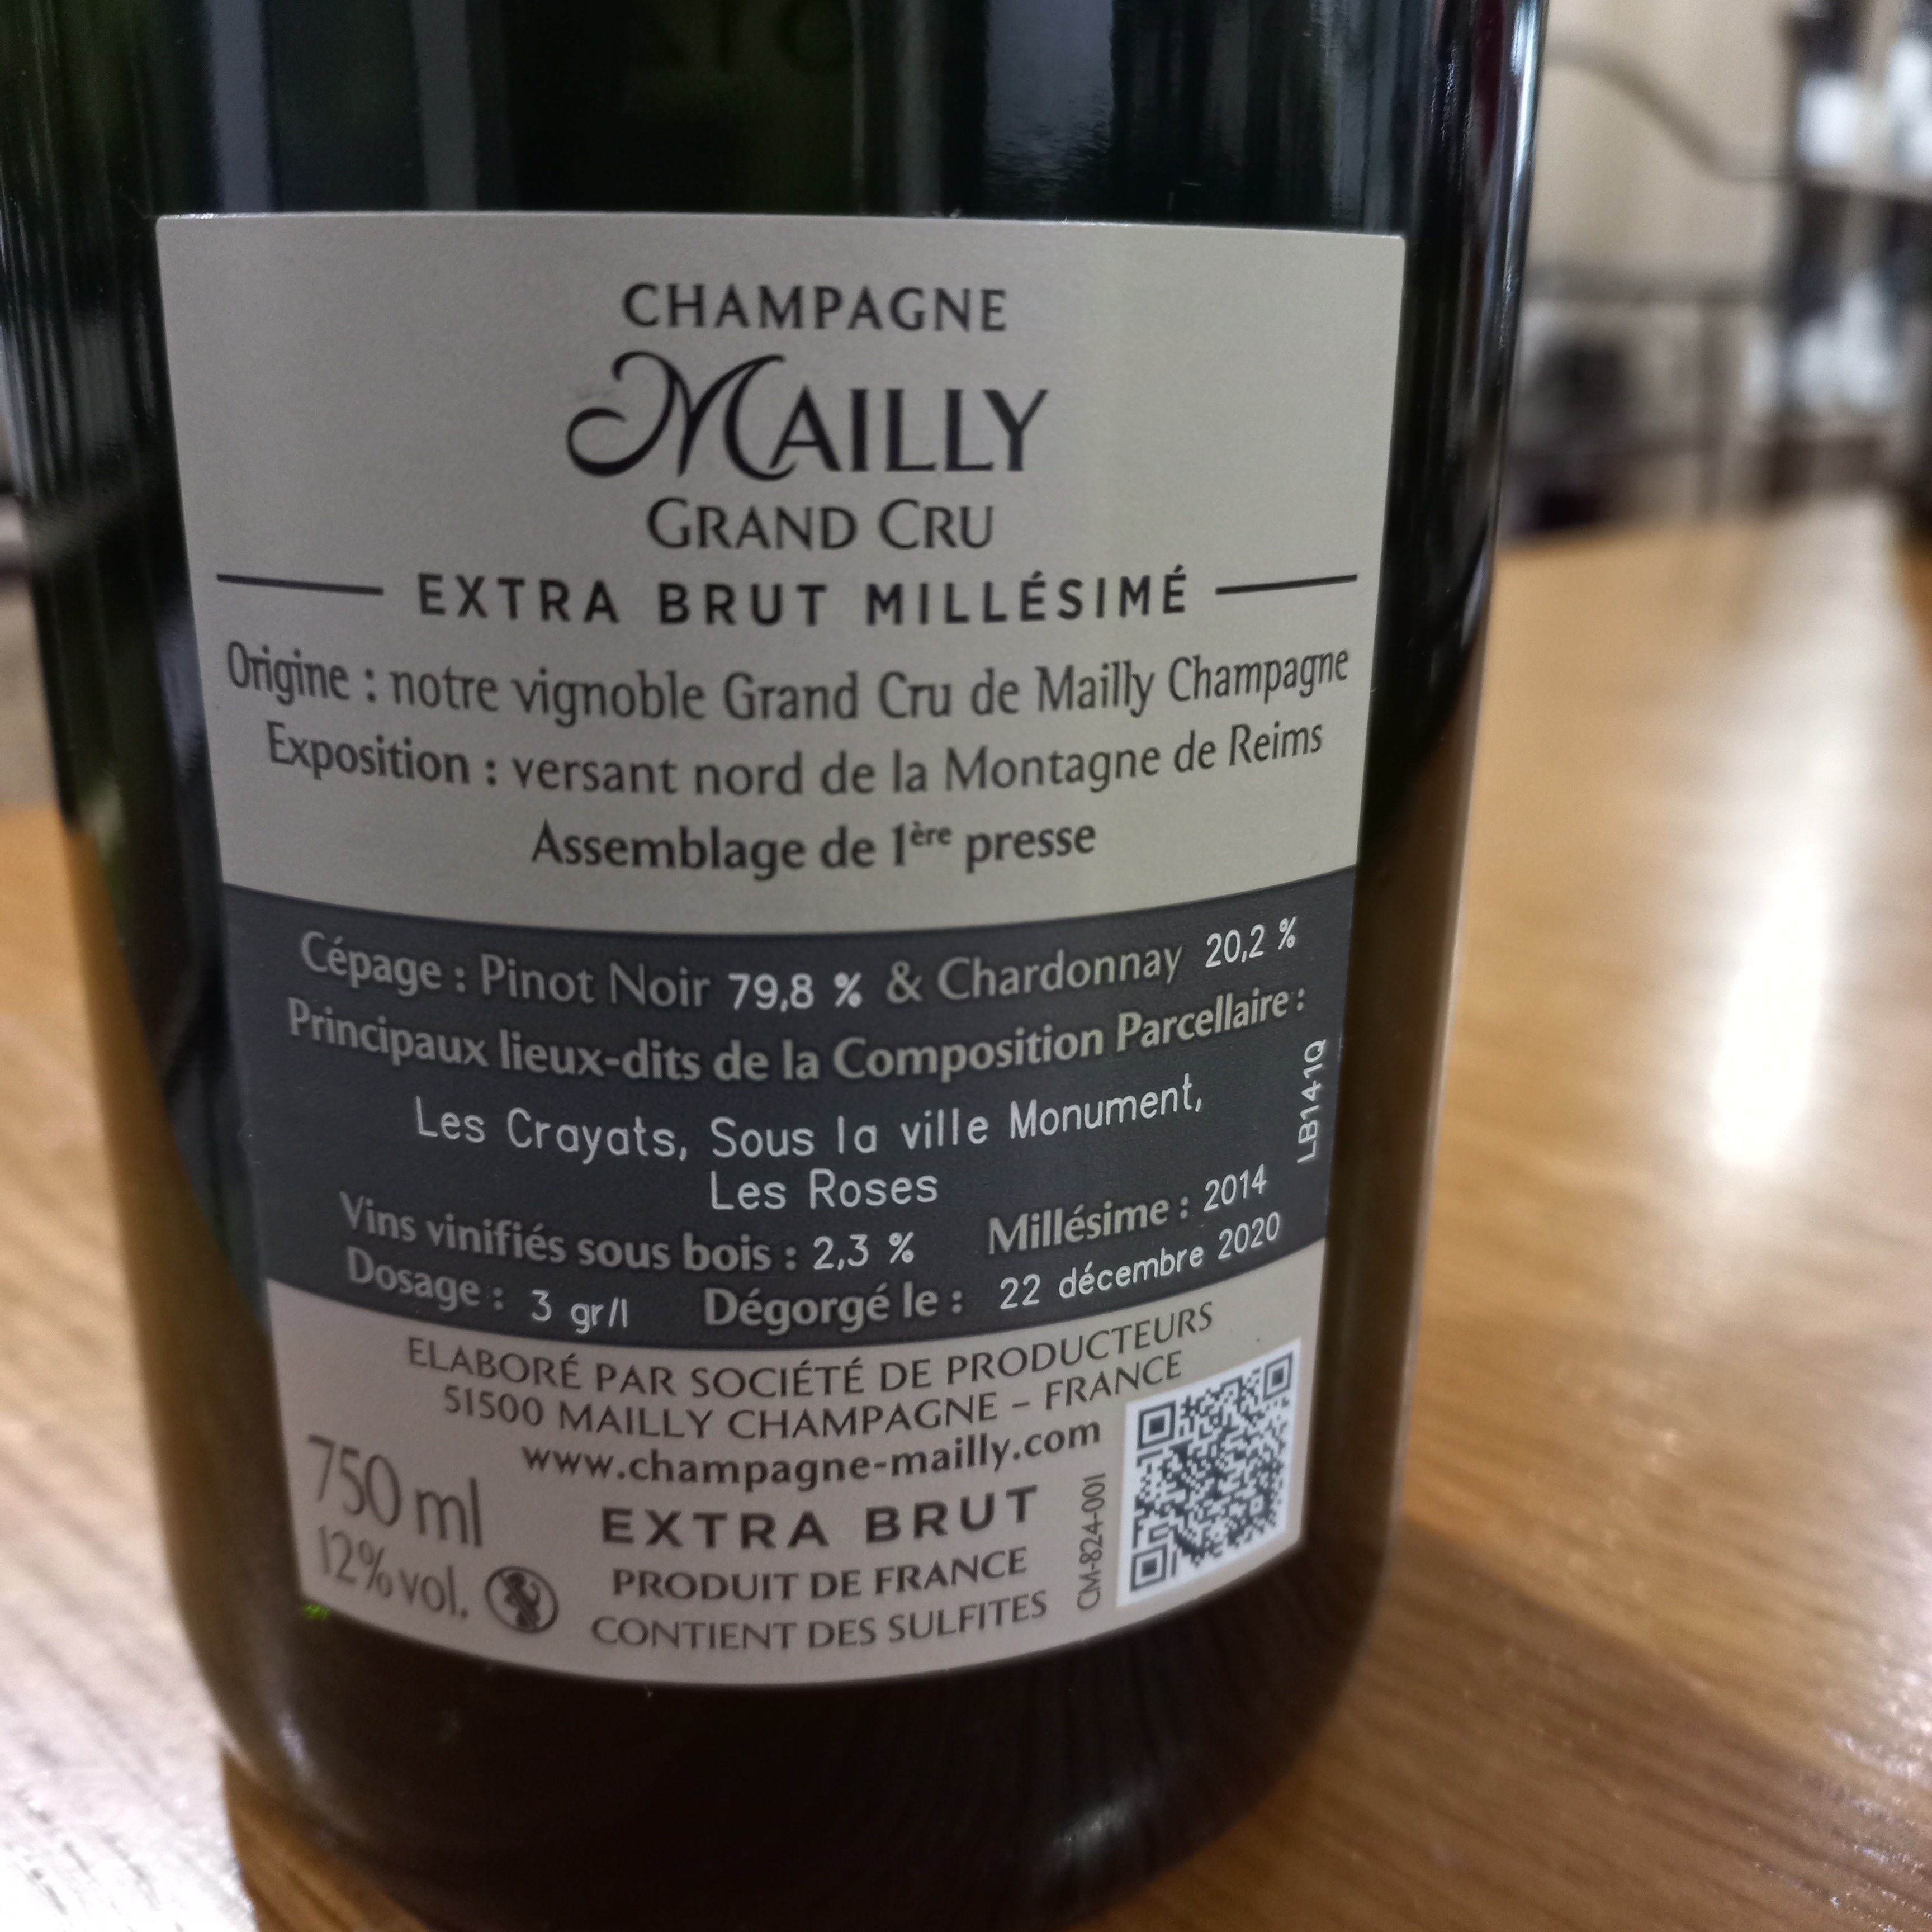 Champagne Mailly Grand Cru. Millésimé 2014